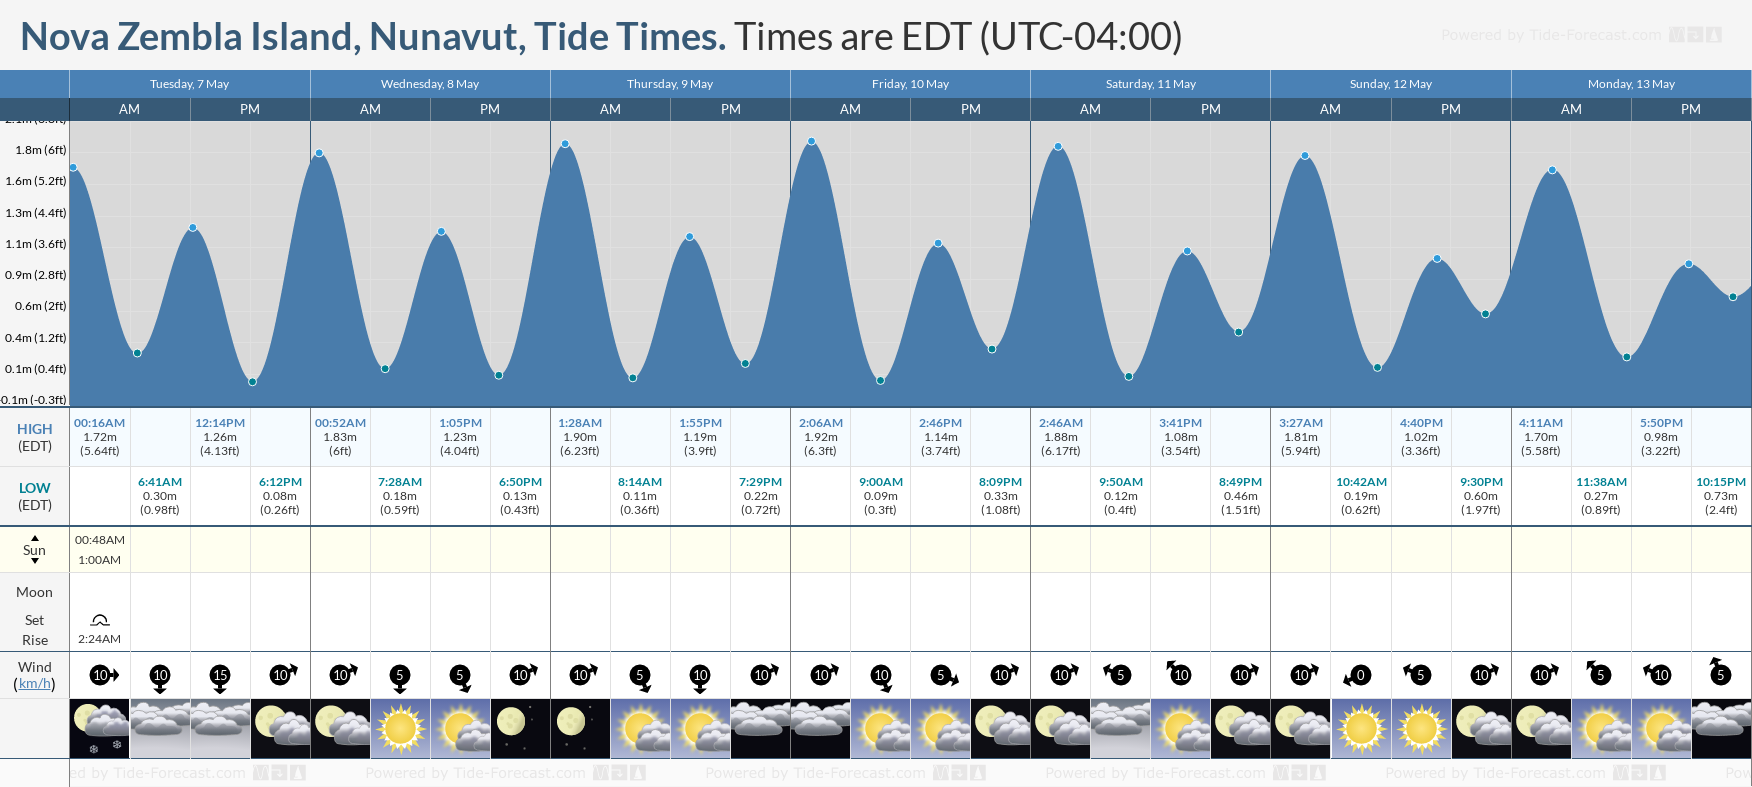 Nova Zembla Island, Nunavut Tide Chart including high and low tide tide times for the next 7 days